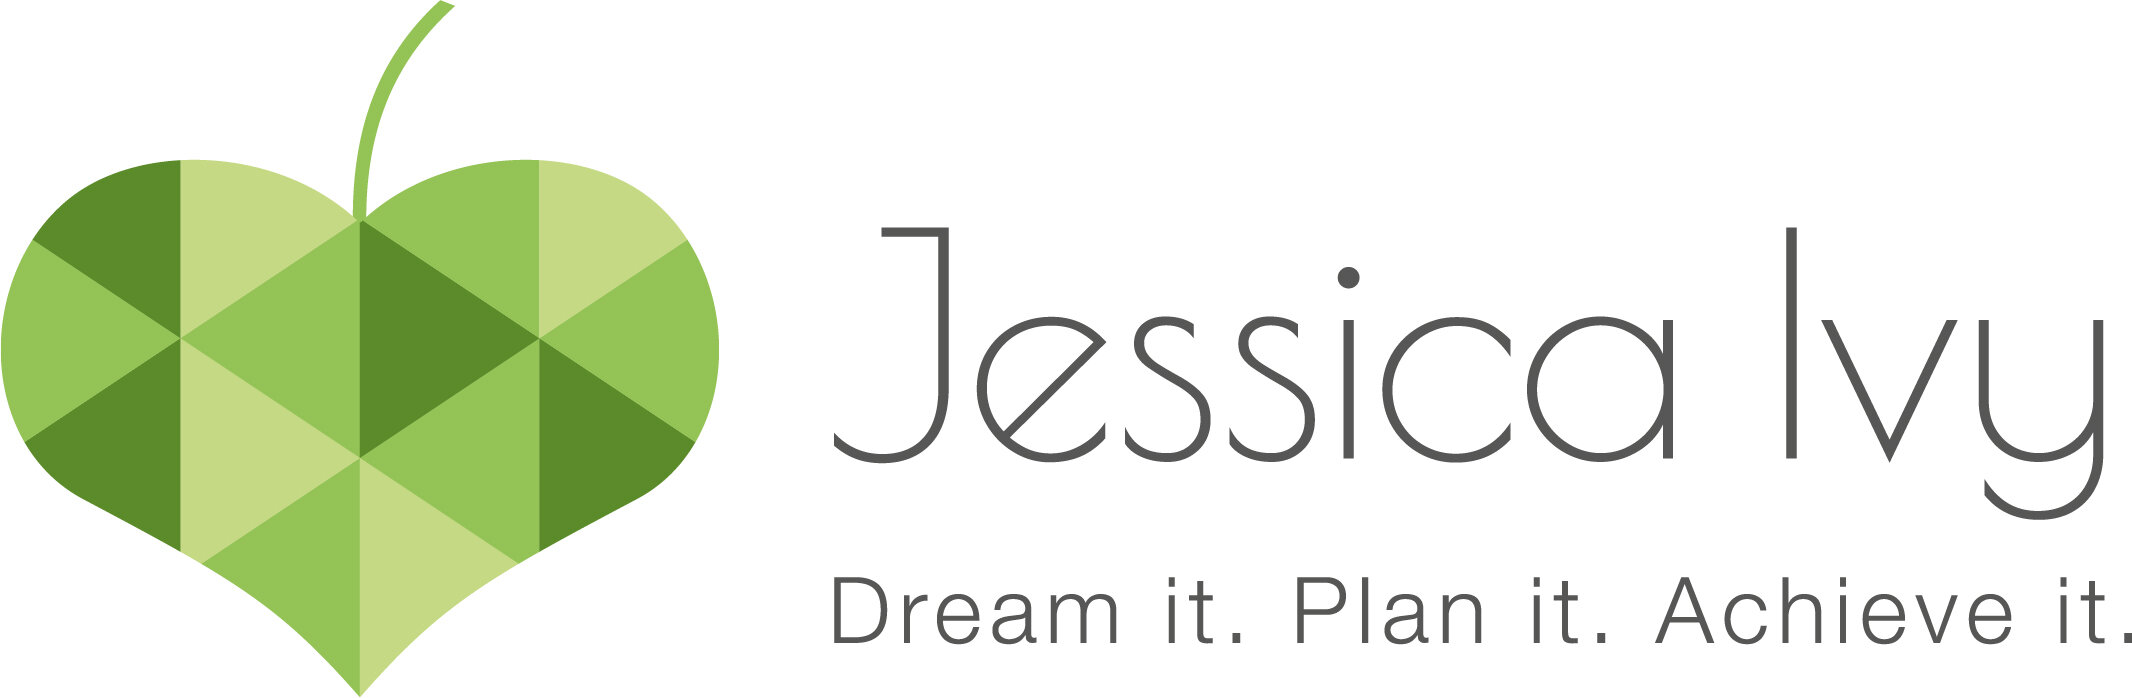 Jessica Ivy